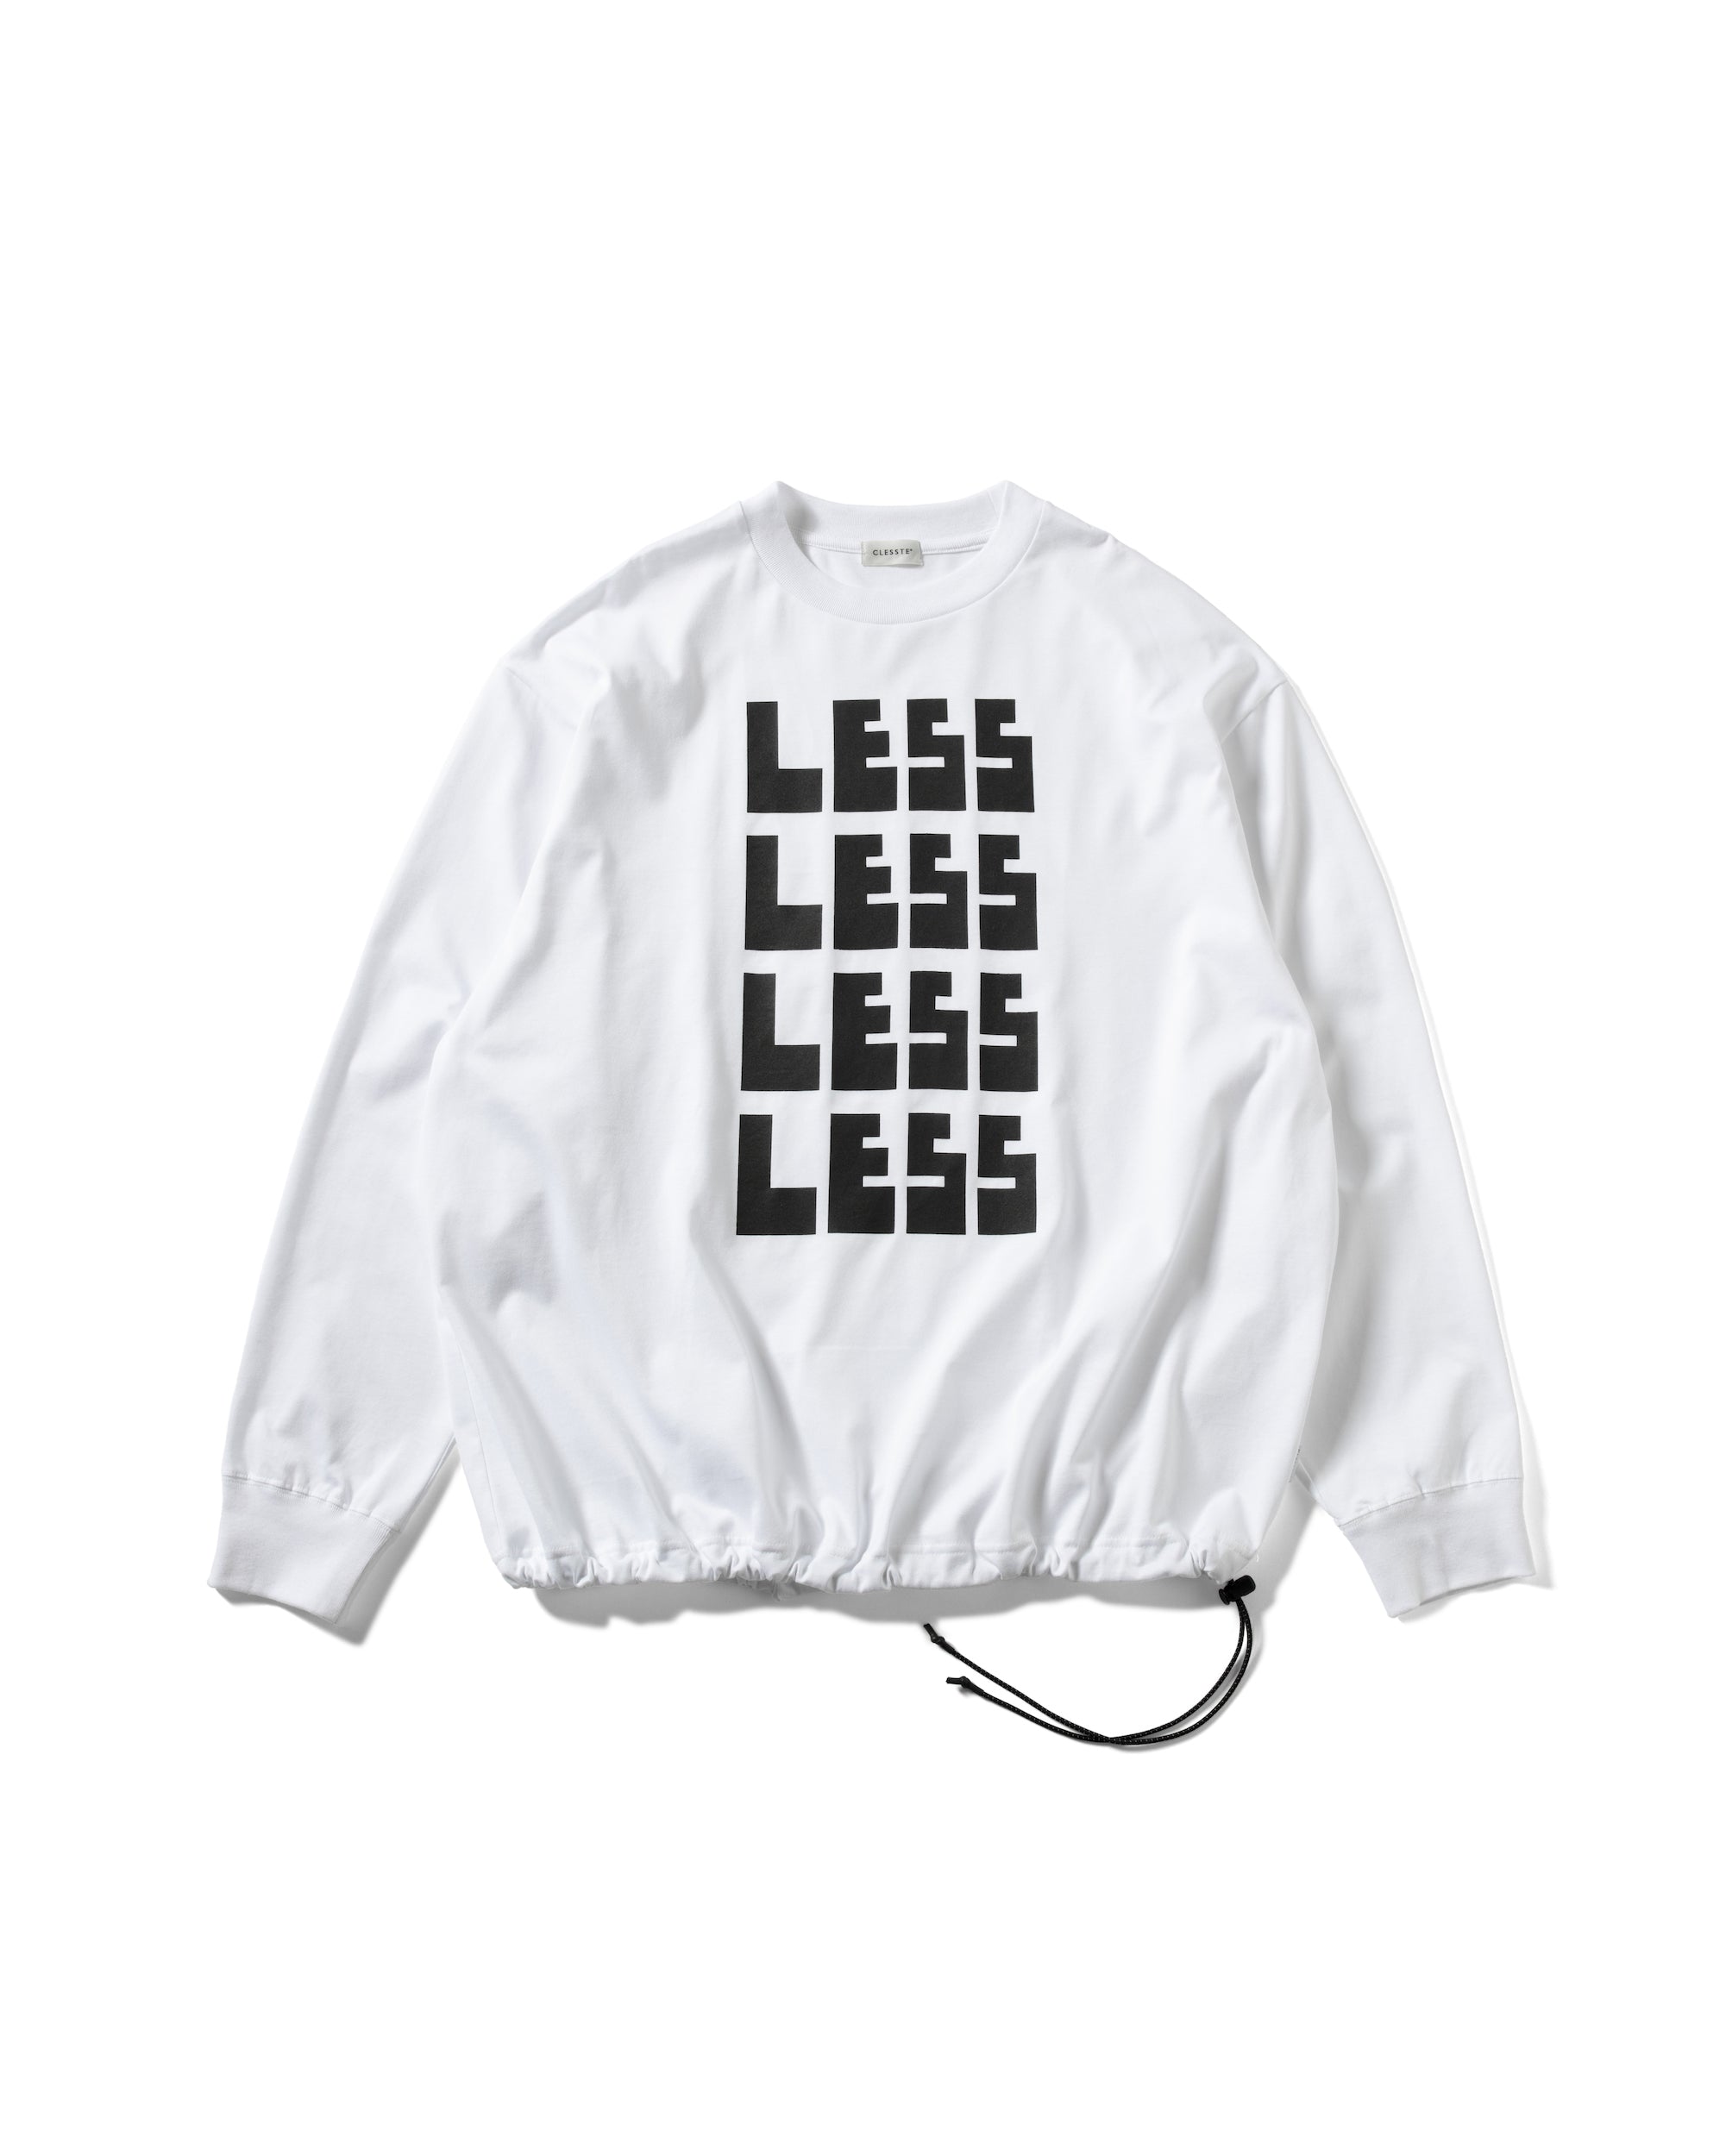 "LESS" MASSIVE L/S T-SHIRT WITH DRAWSTRINGS